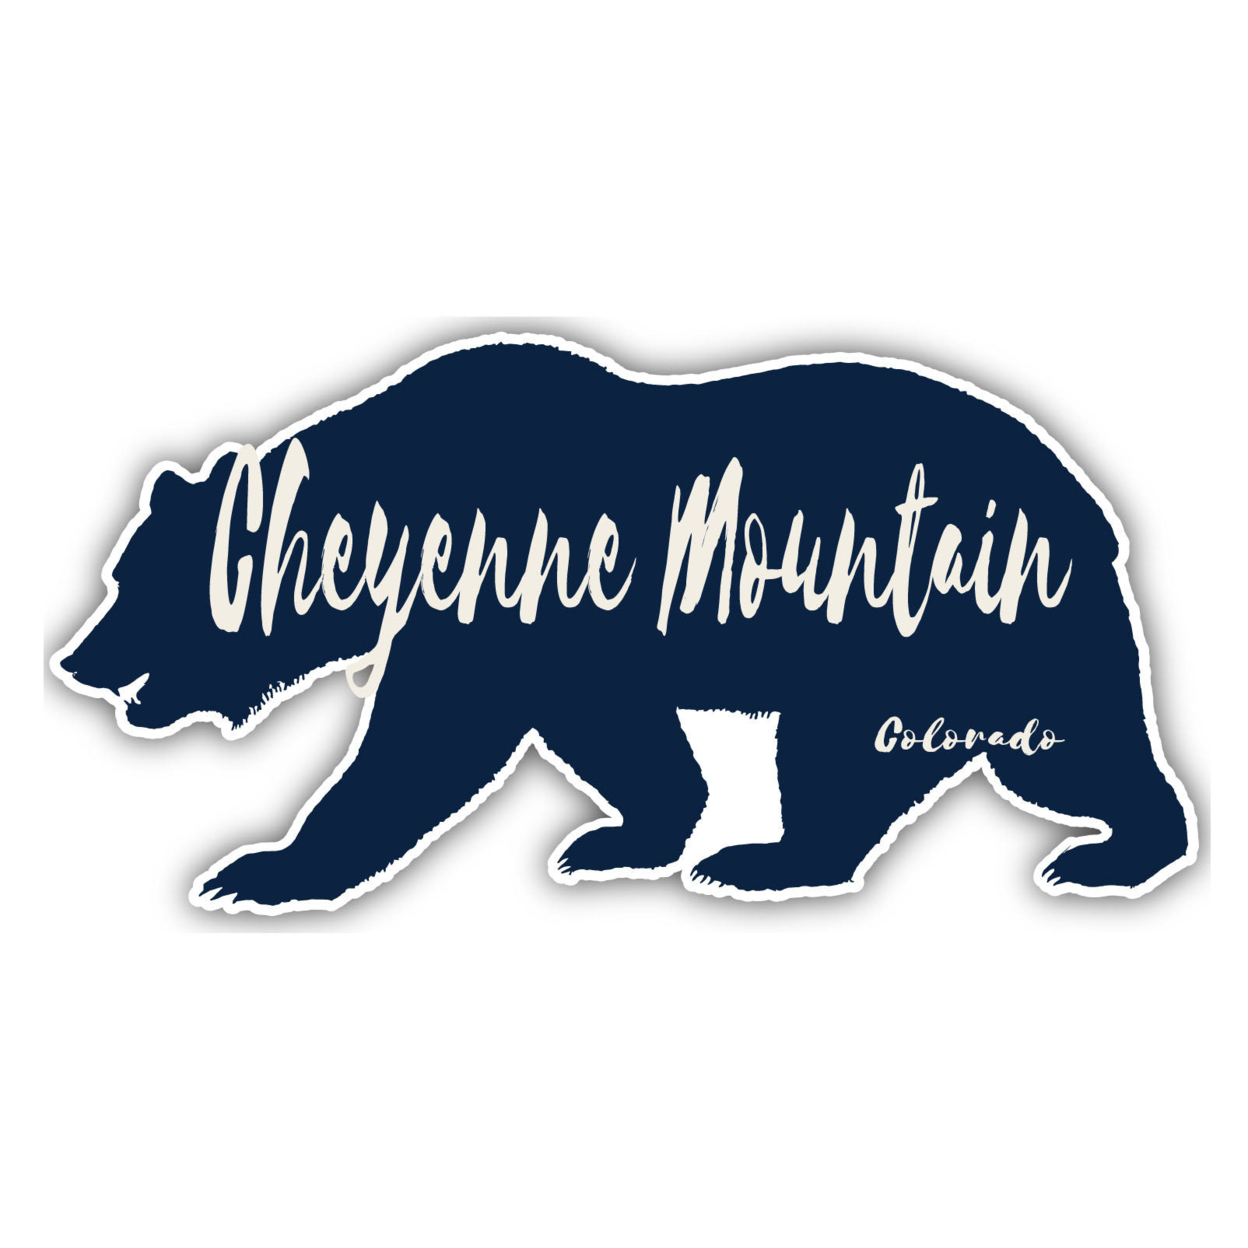 Cheyenne Mountain Colorado Souvenir Decorative Stickers (Choose Theme And Size) - Single Unit, 10-Inch, Bear